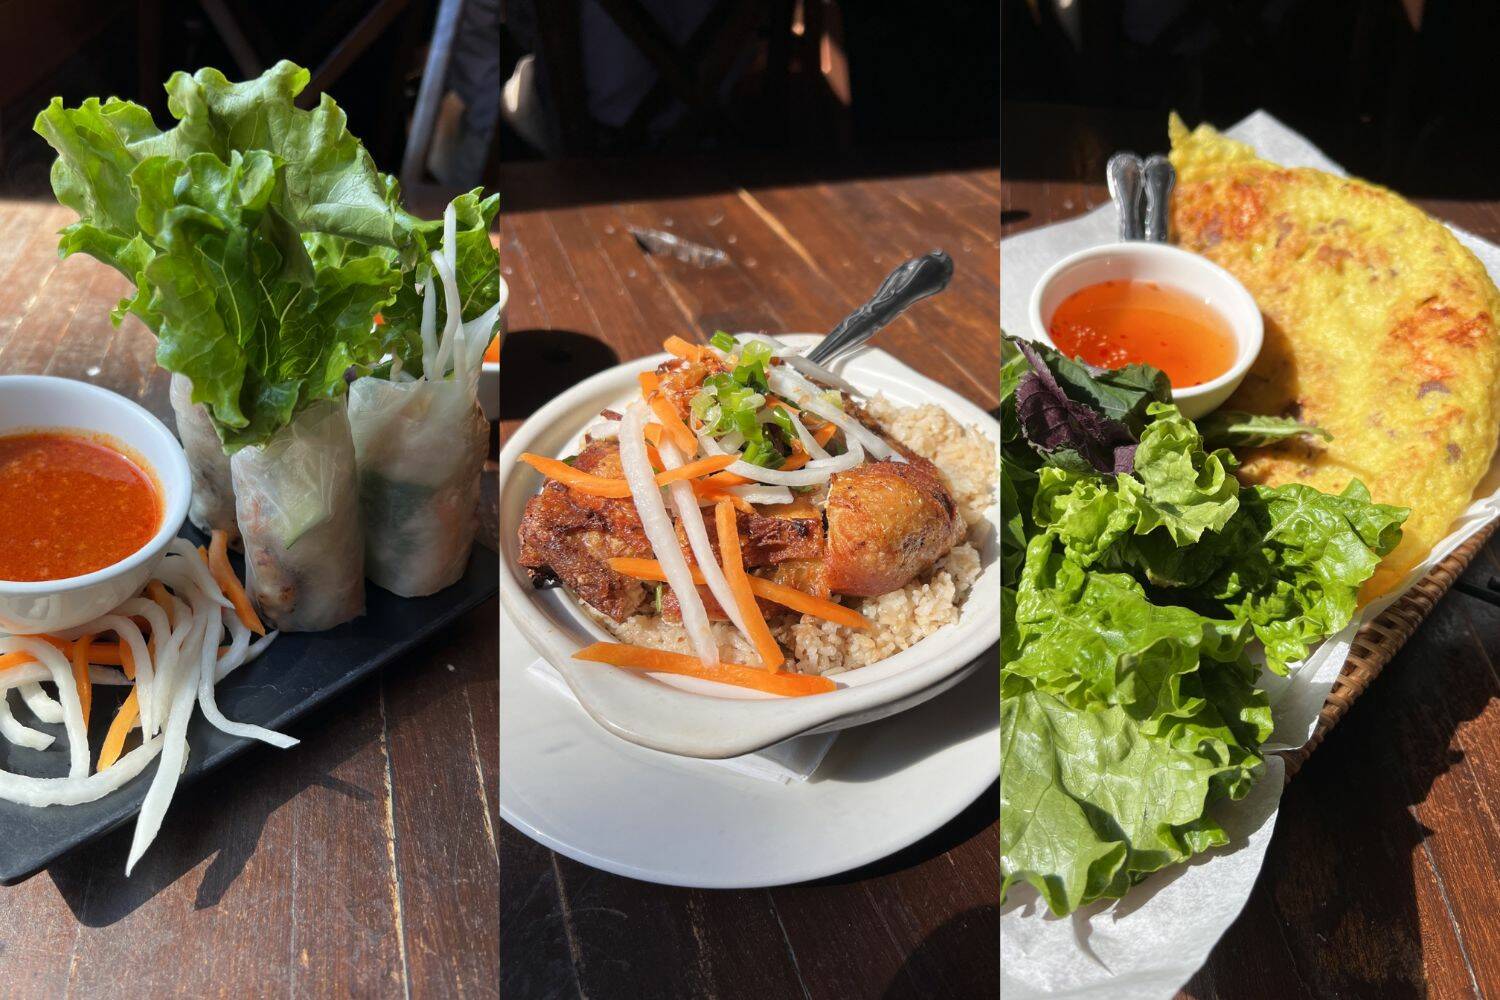 Cameron Sheppard/Alb Media
Pictured: Goi Cuon Chao Tom, pork sausage salad fresh rolls; Com Ga Siu Siu, a chicken rice pot of sorts; and Banh Xeo, a Vietnamese-style crepe.